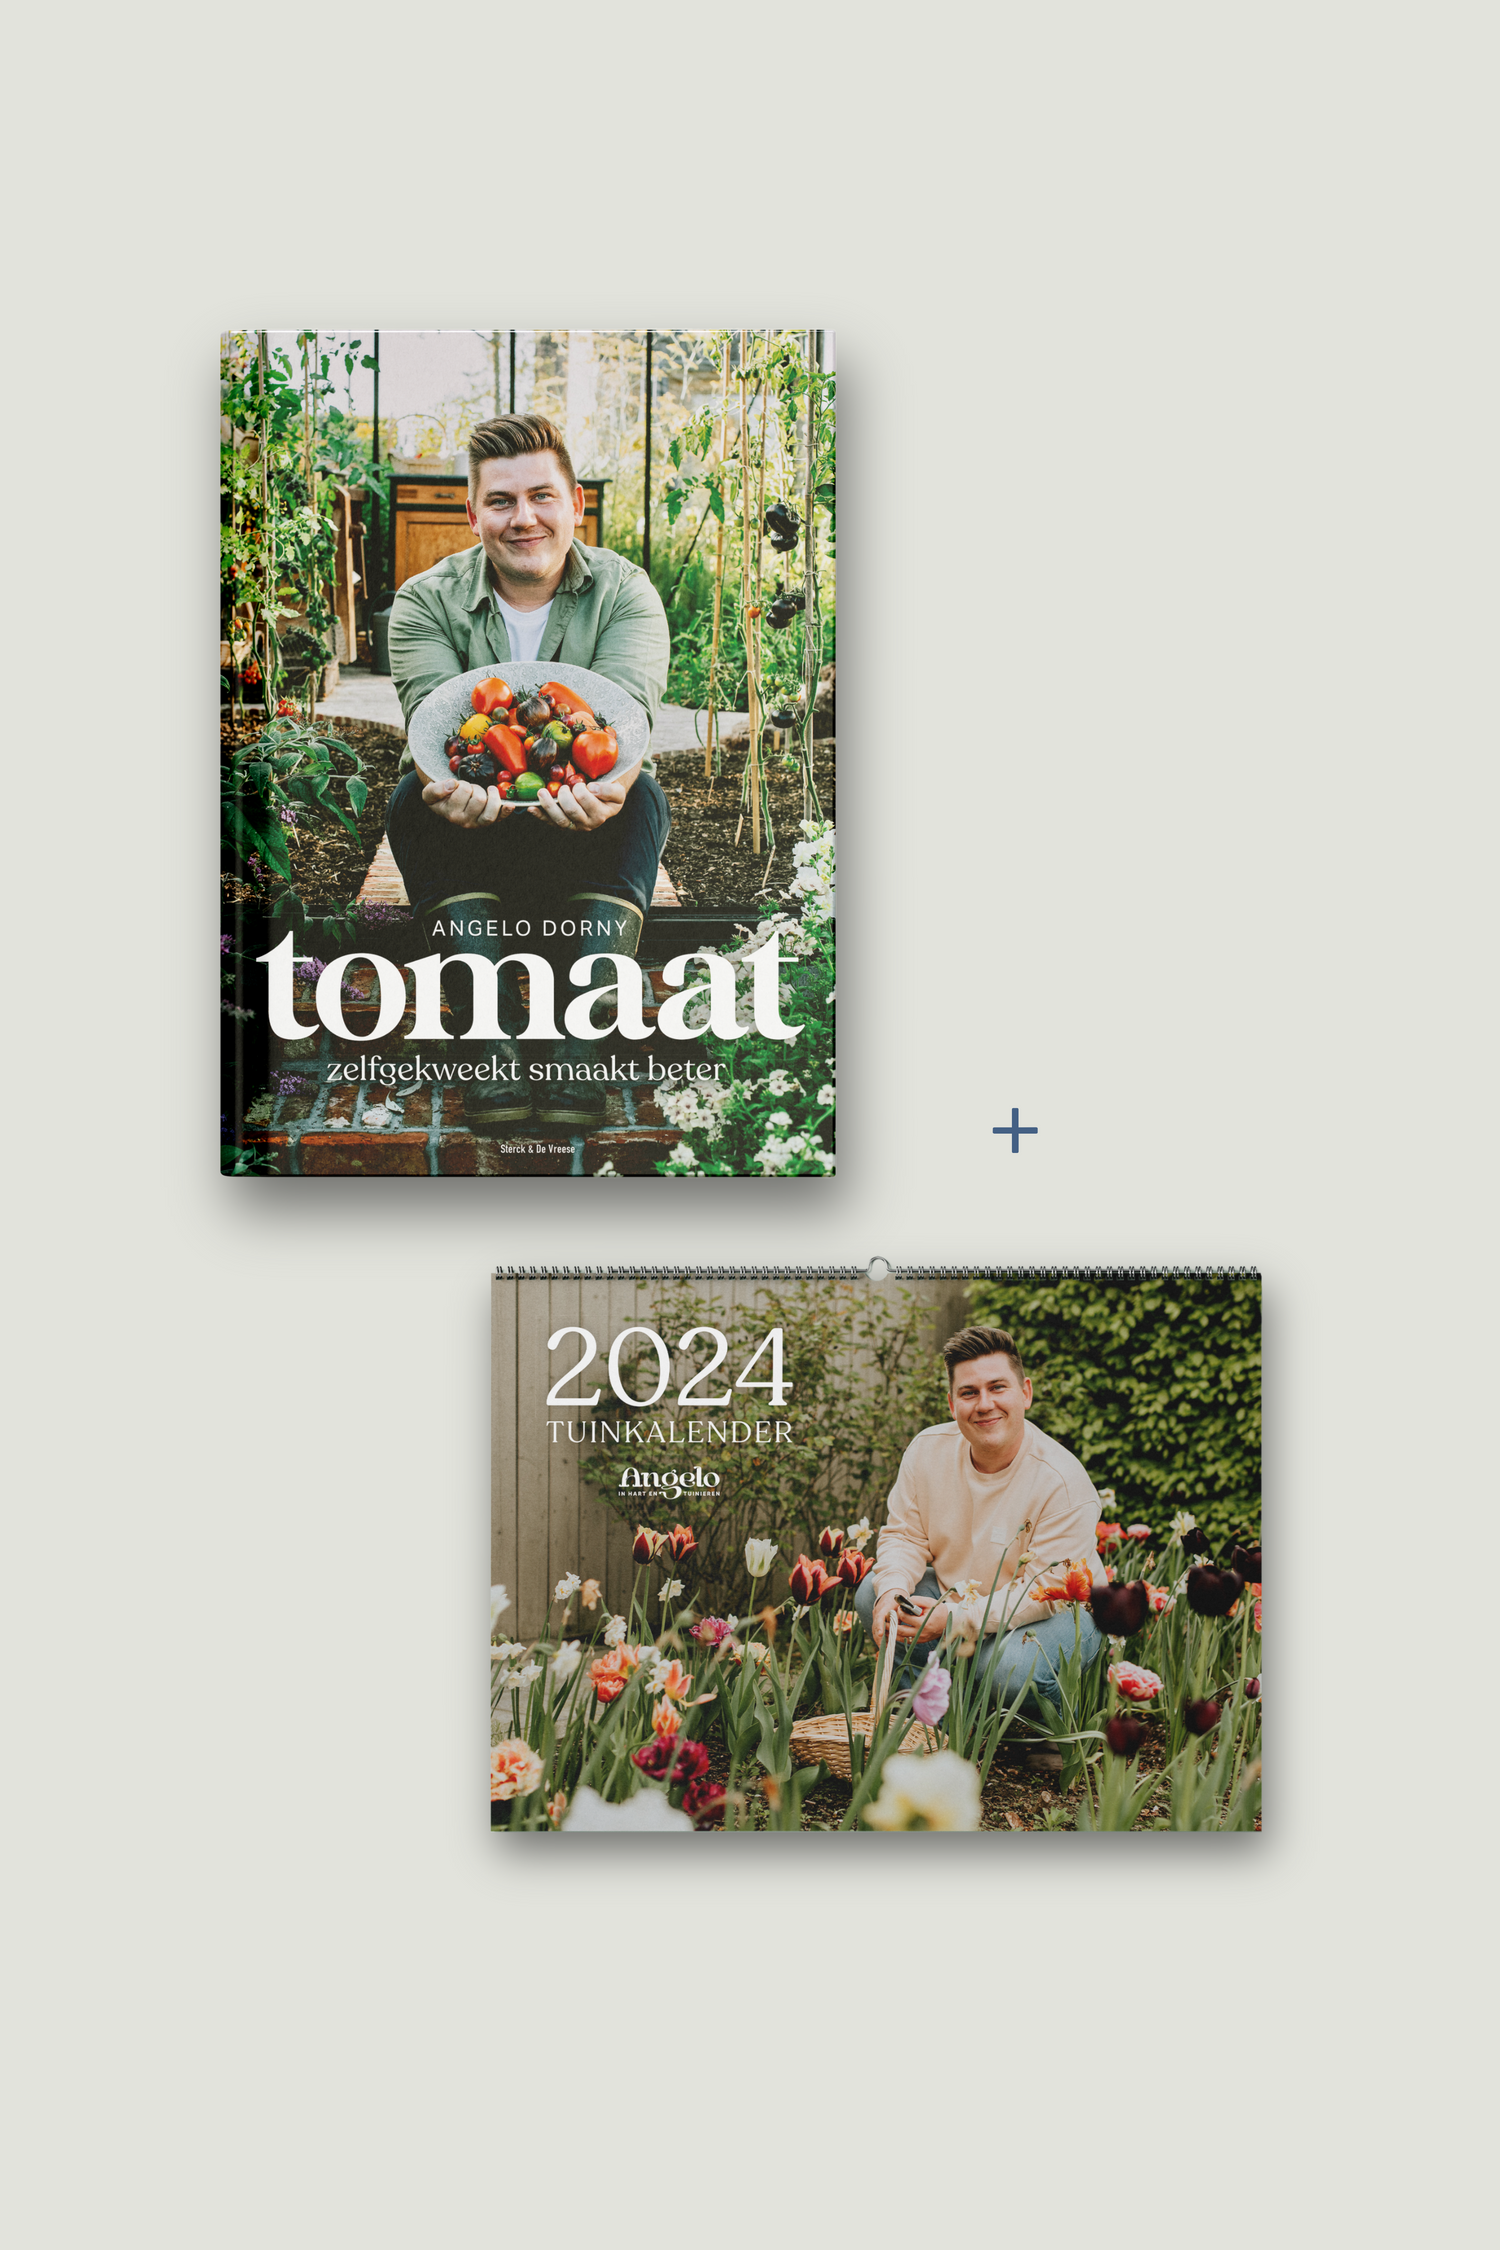 Tuinkalender 2024 + tomatenboek